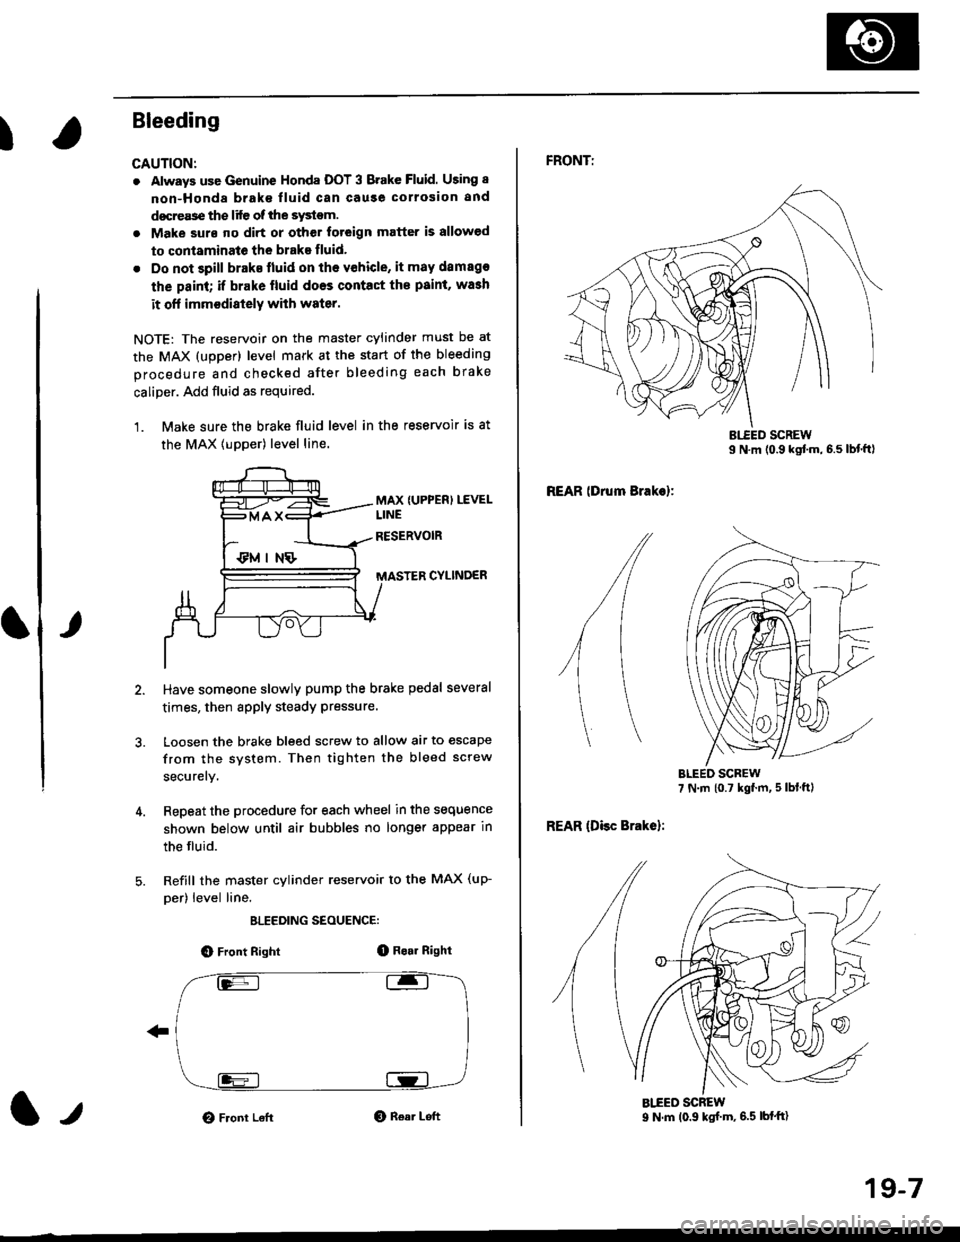 HONDA CIVIC 1996 6.G Workshop Manual I
Bleeding
CAUTION:
. Always use Genuine Honda DOT 3 Brake Fluid. Using 8
non-Honda brak€ fluid can cause corrosion and
docrea3e the life of the system.
. Make surs ||o dirt or other foteign matter 